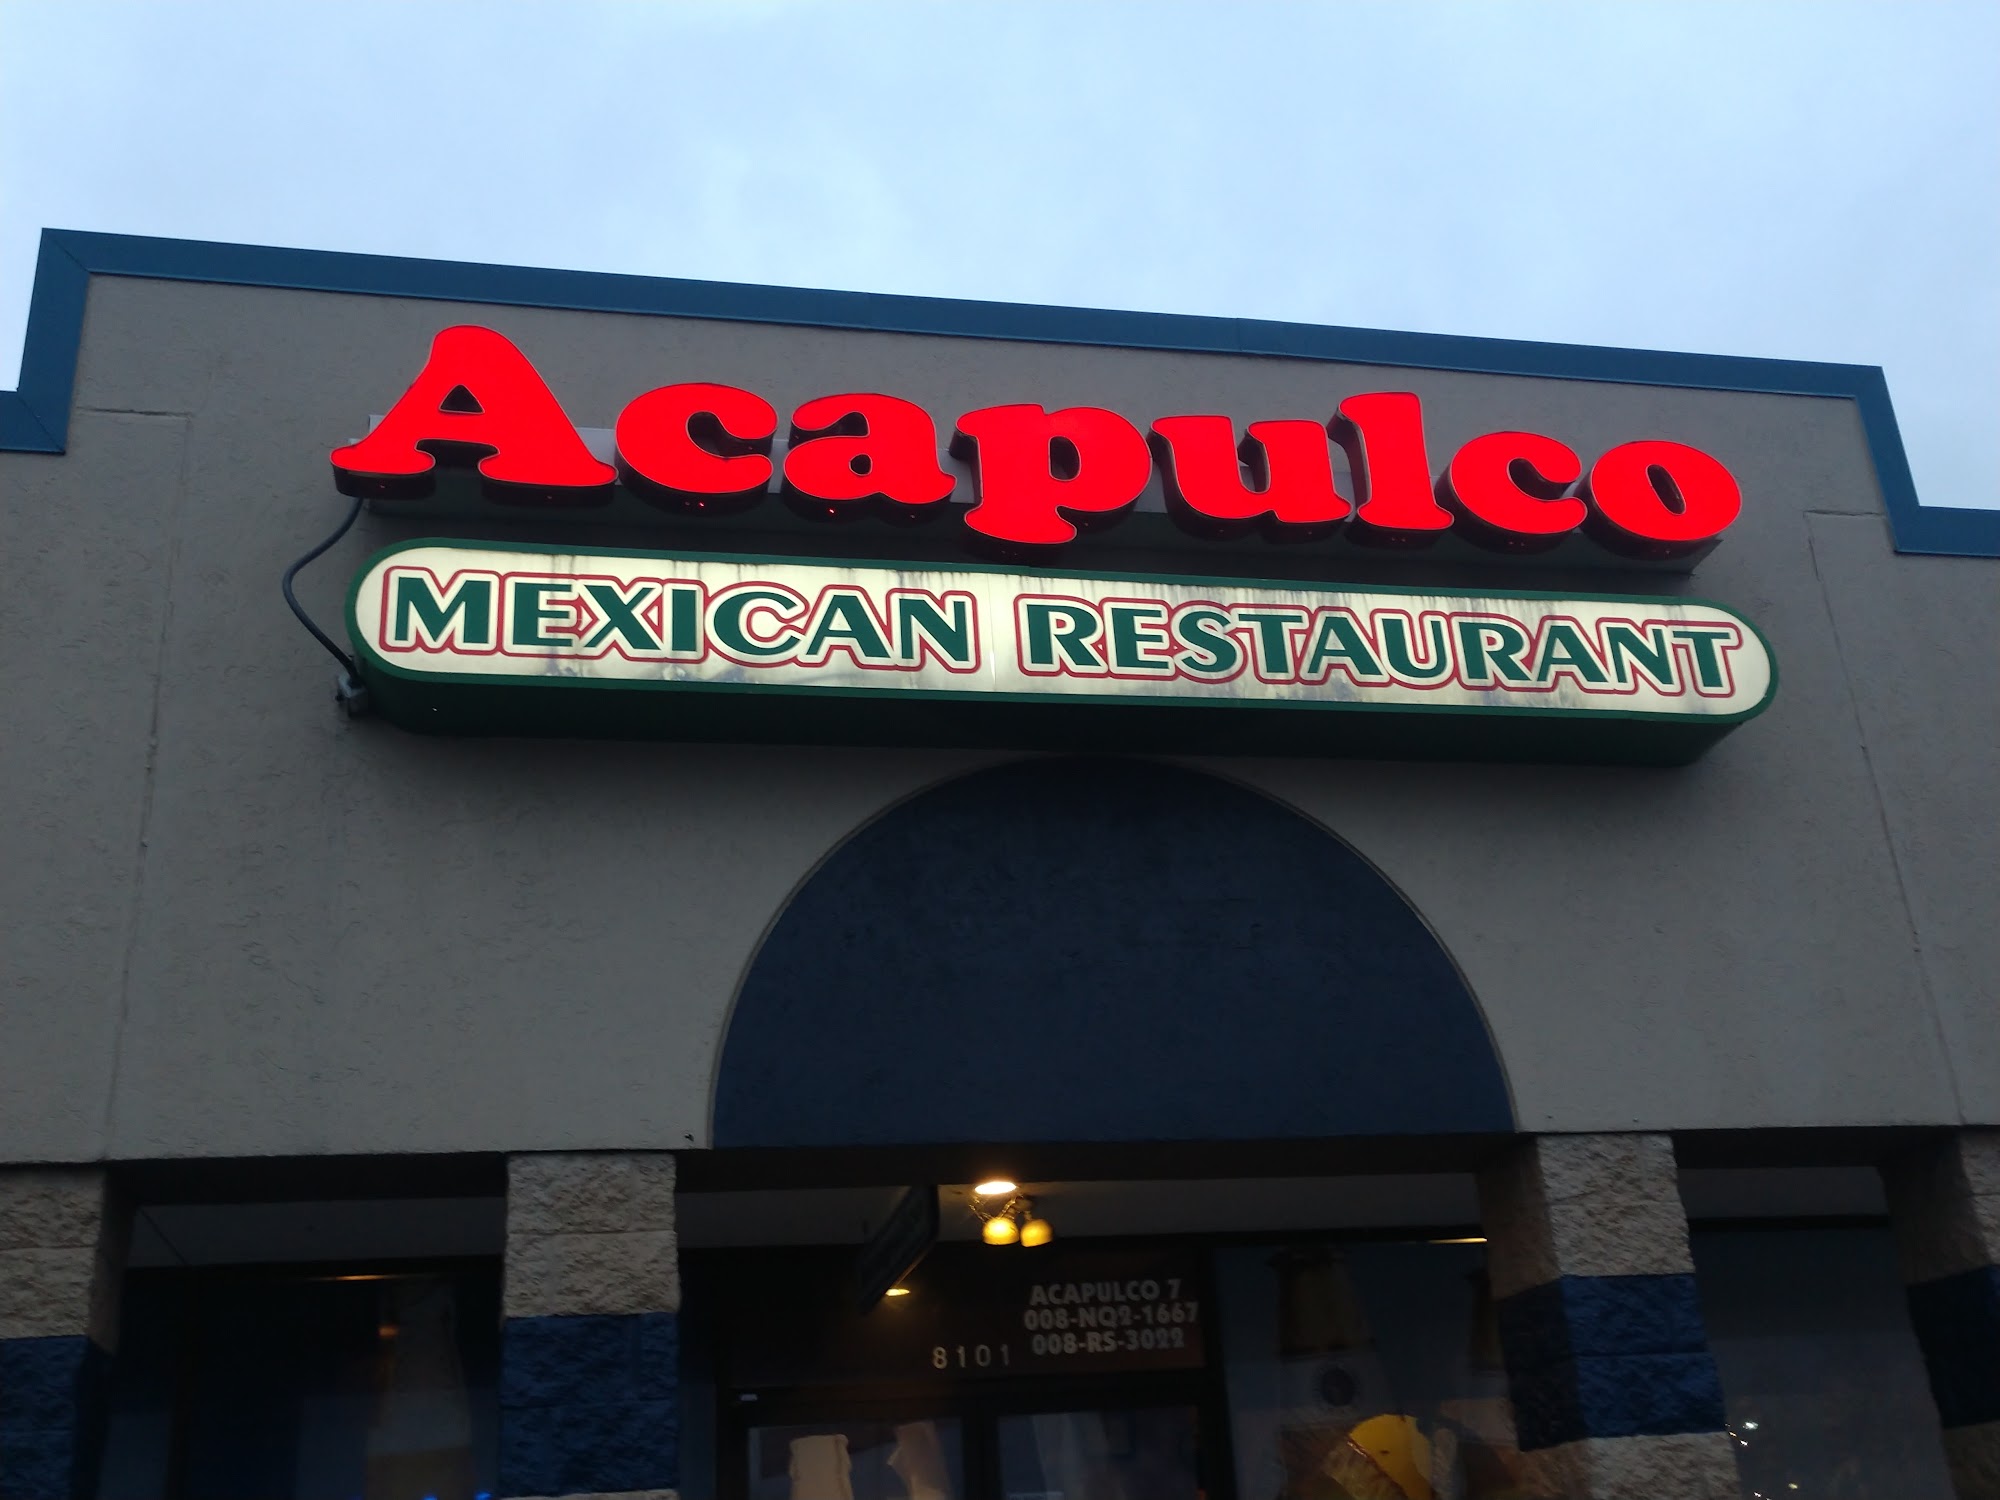 Acapulco Mexican Restaurant